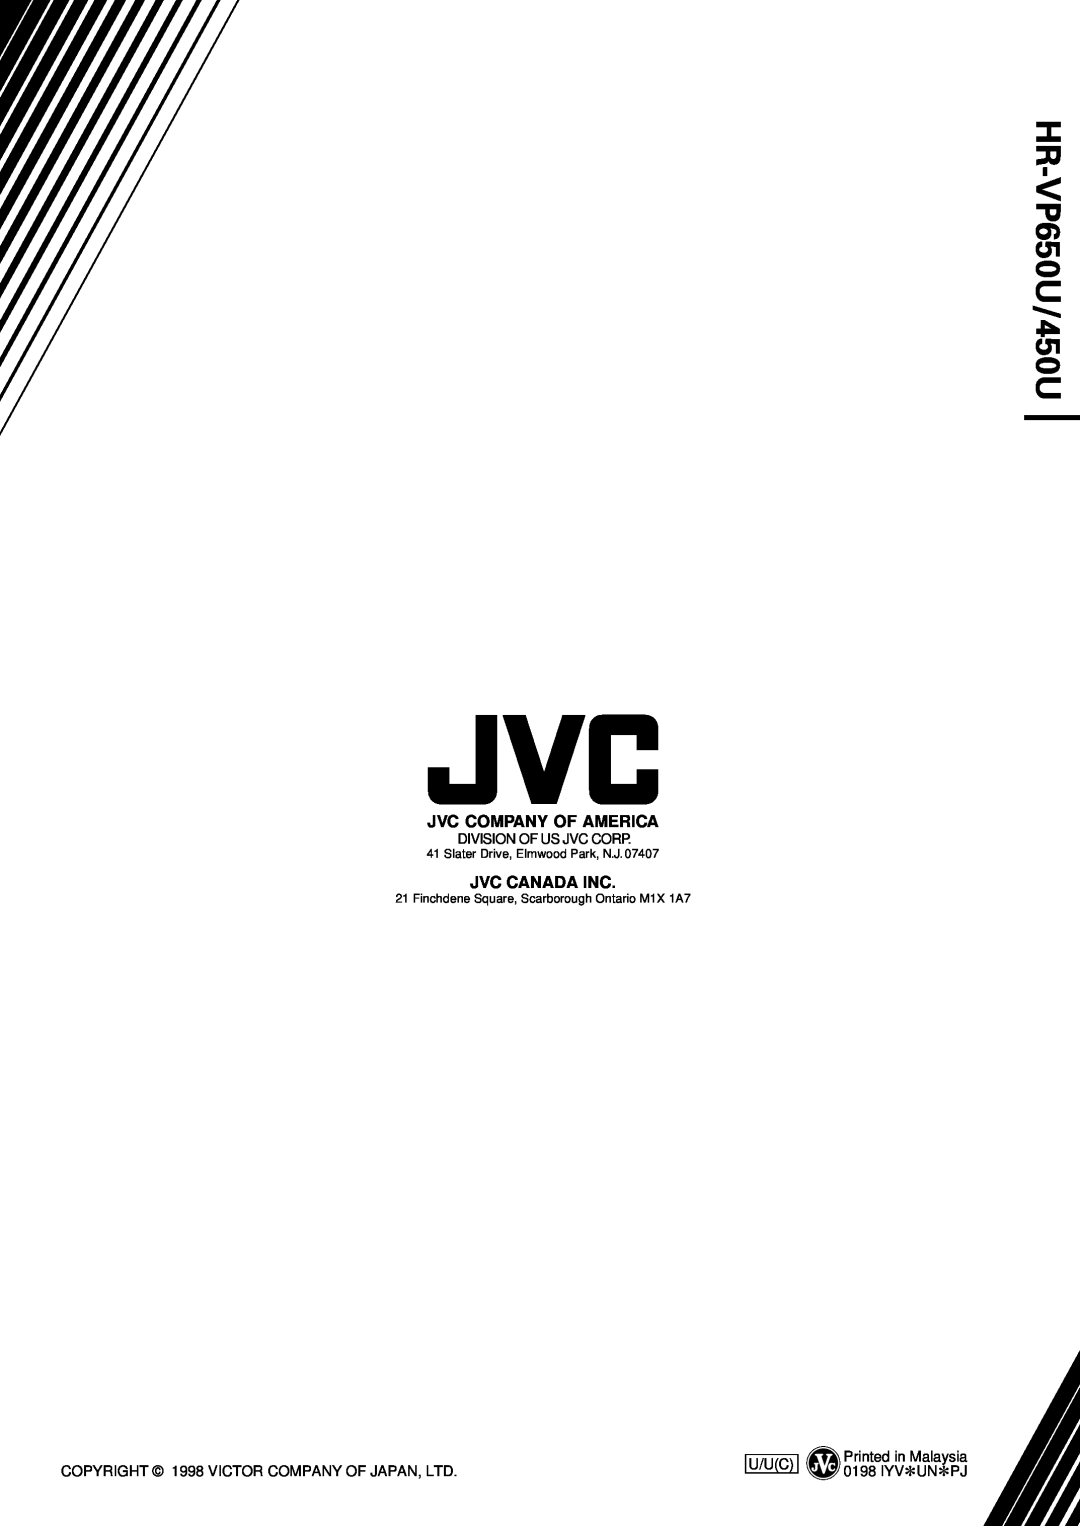 JVC HR-VP450U instruction manual HR-VP650U/450U, Jvc Company Of America, Jvc Canada Inc, Division Of Us Jvc Corp, U/Uc 